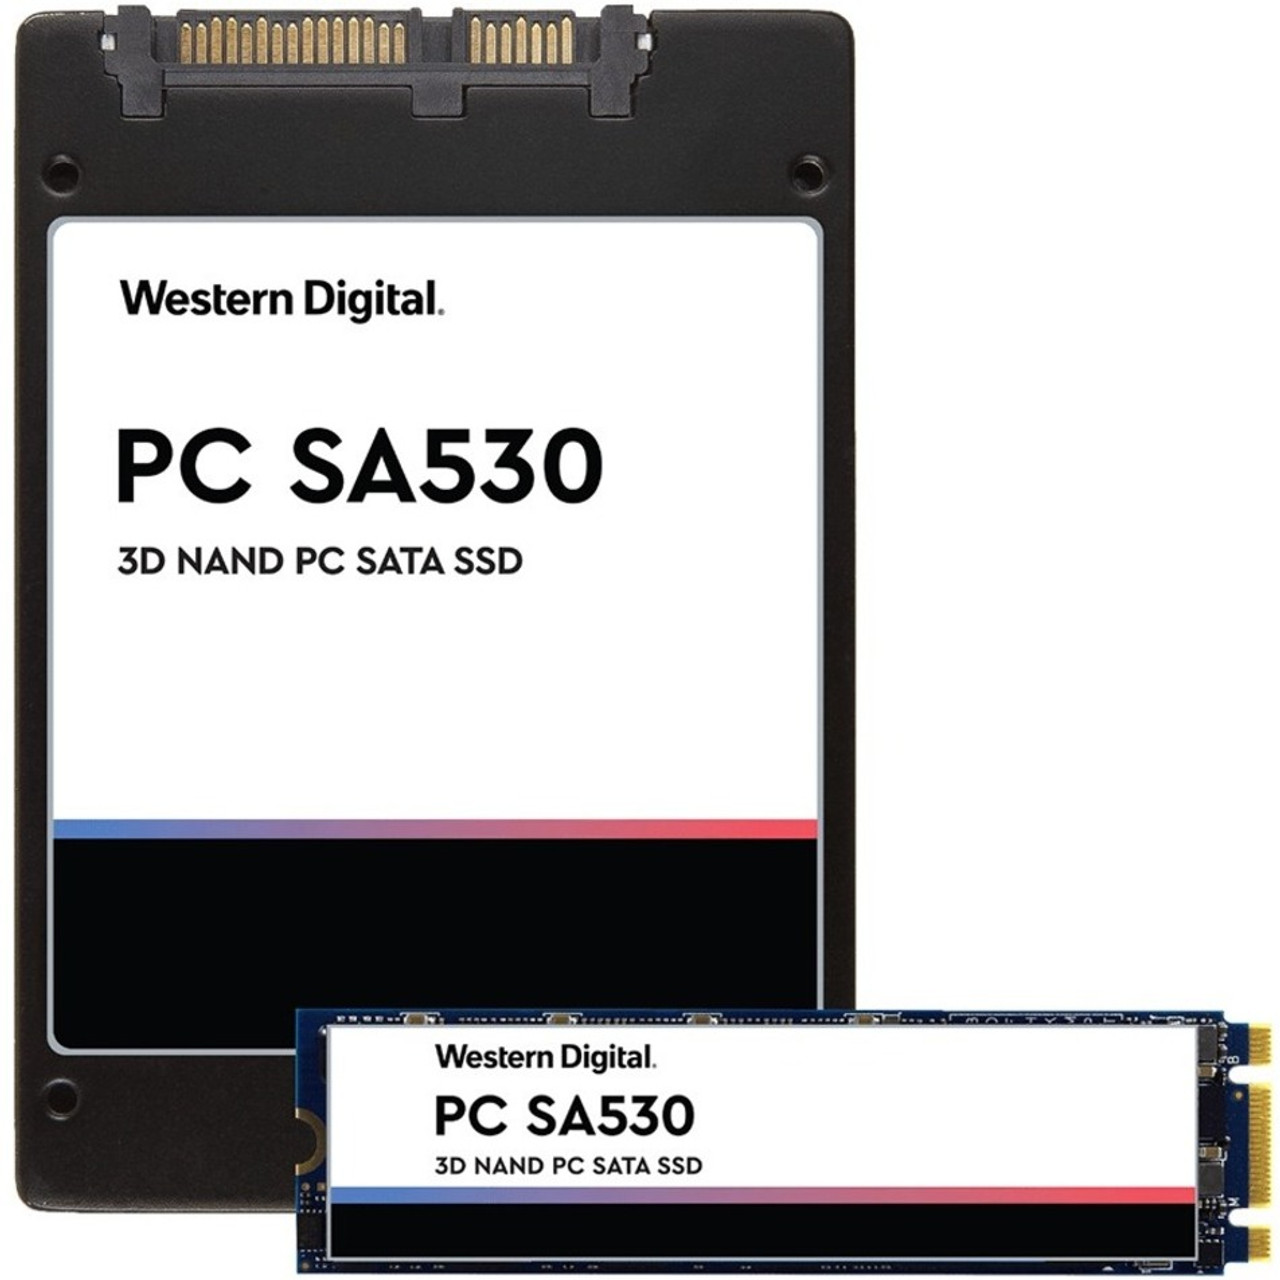 Western Digital PC SA530 512 GB Solid State Drive - M.2 2280 Internal - SATA